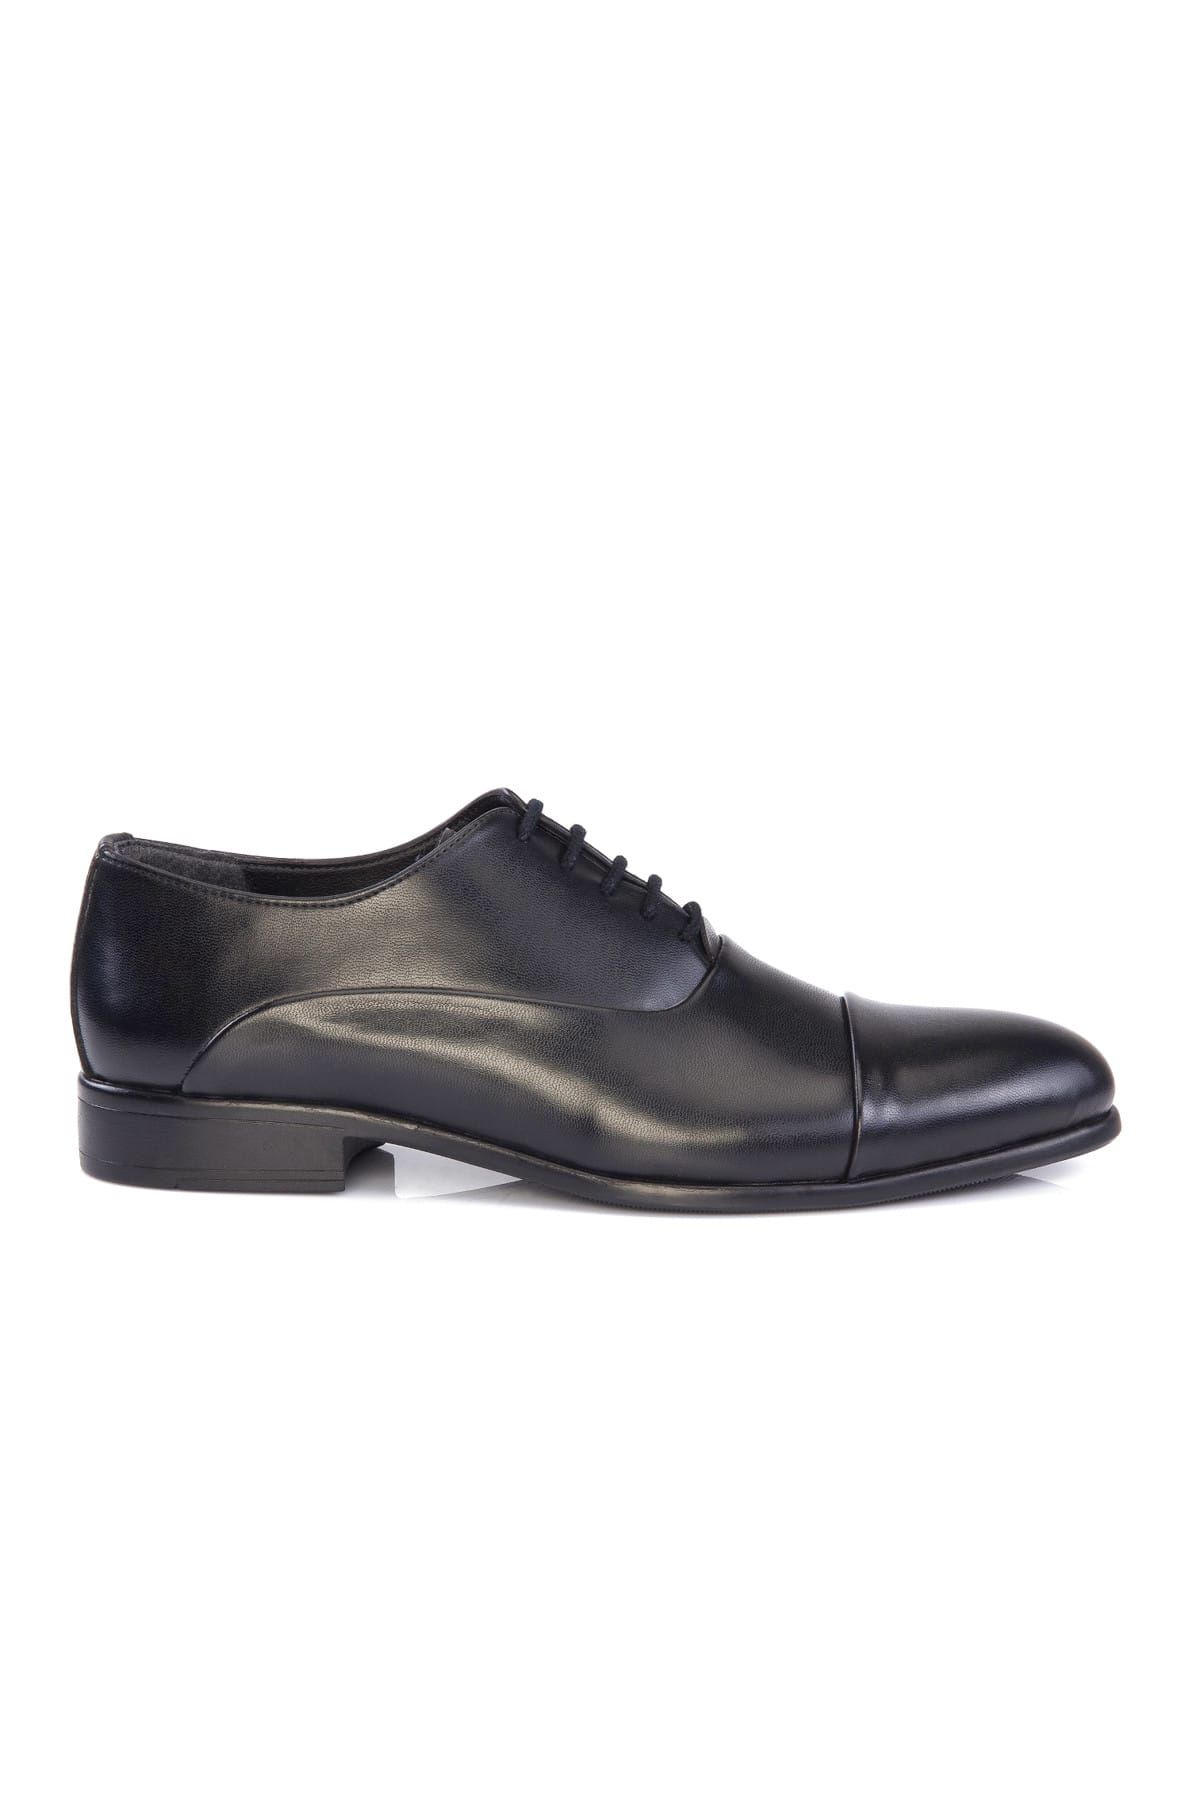 Muggo Siyah Erkek Klasik Ayakkabı DPRMGM703001